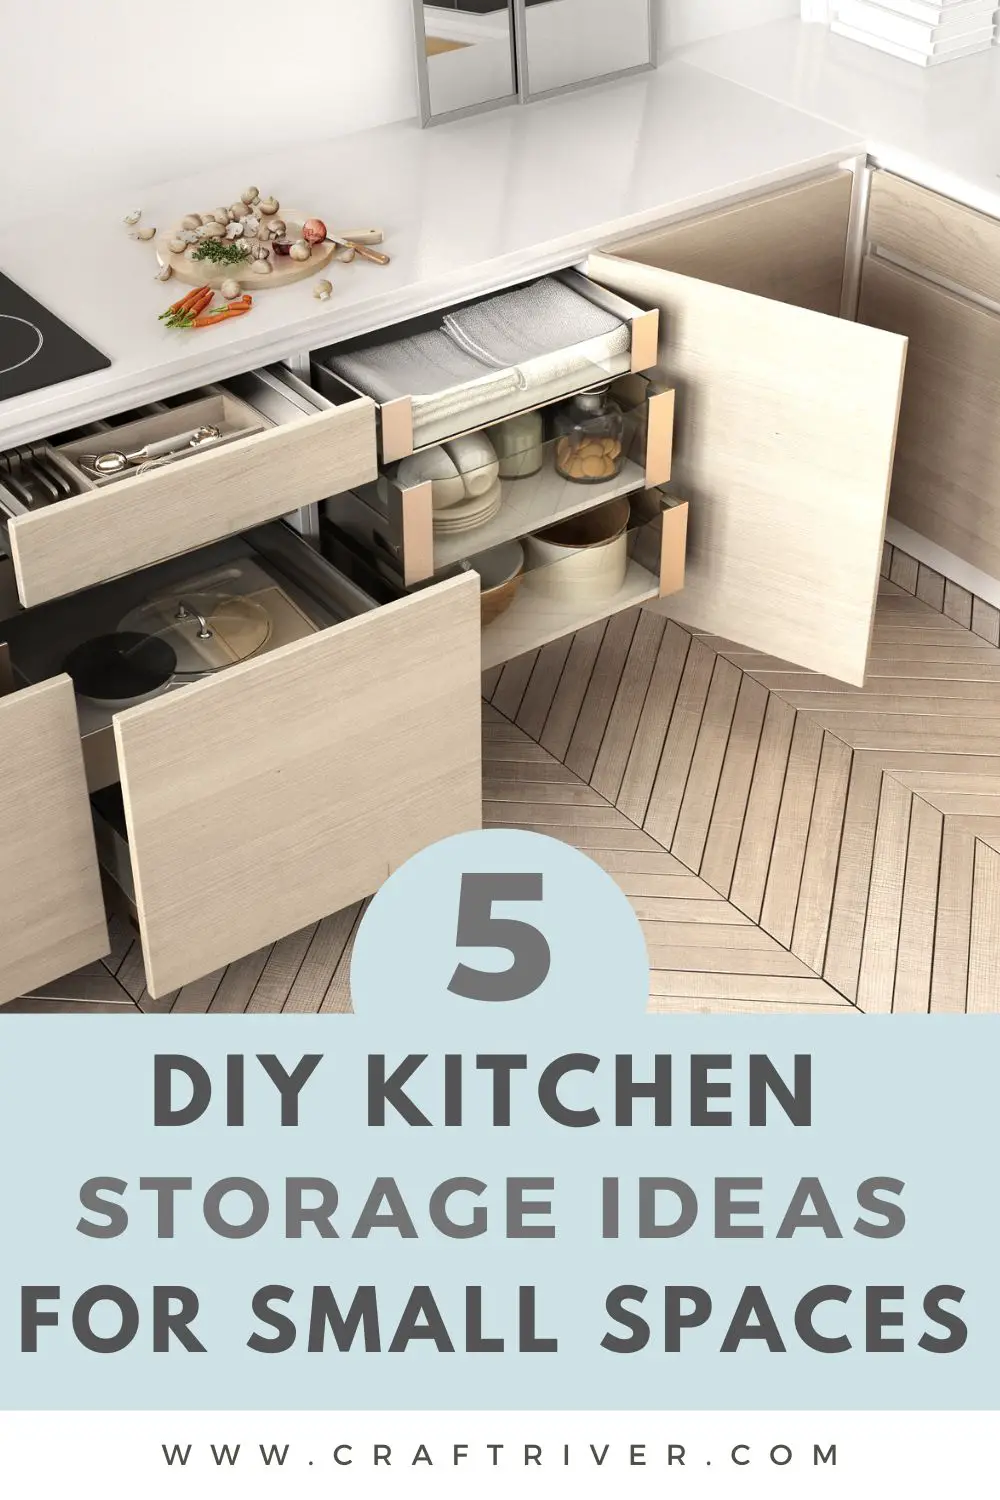 DIY Kitchen Storage Ideas for Small Spaces